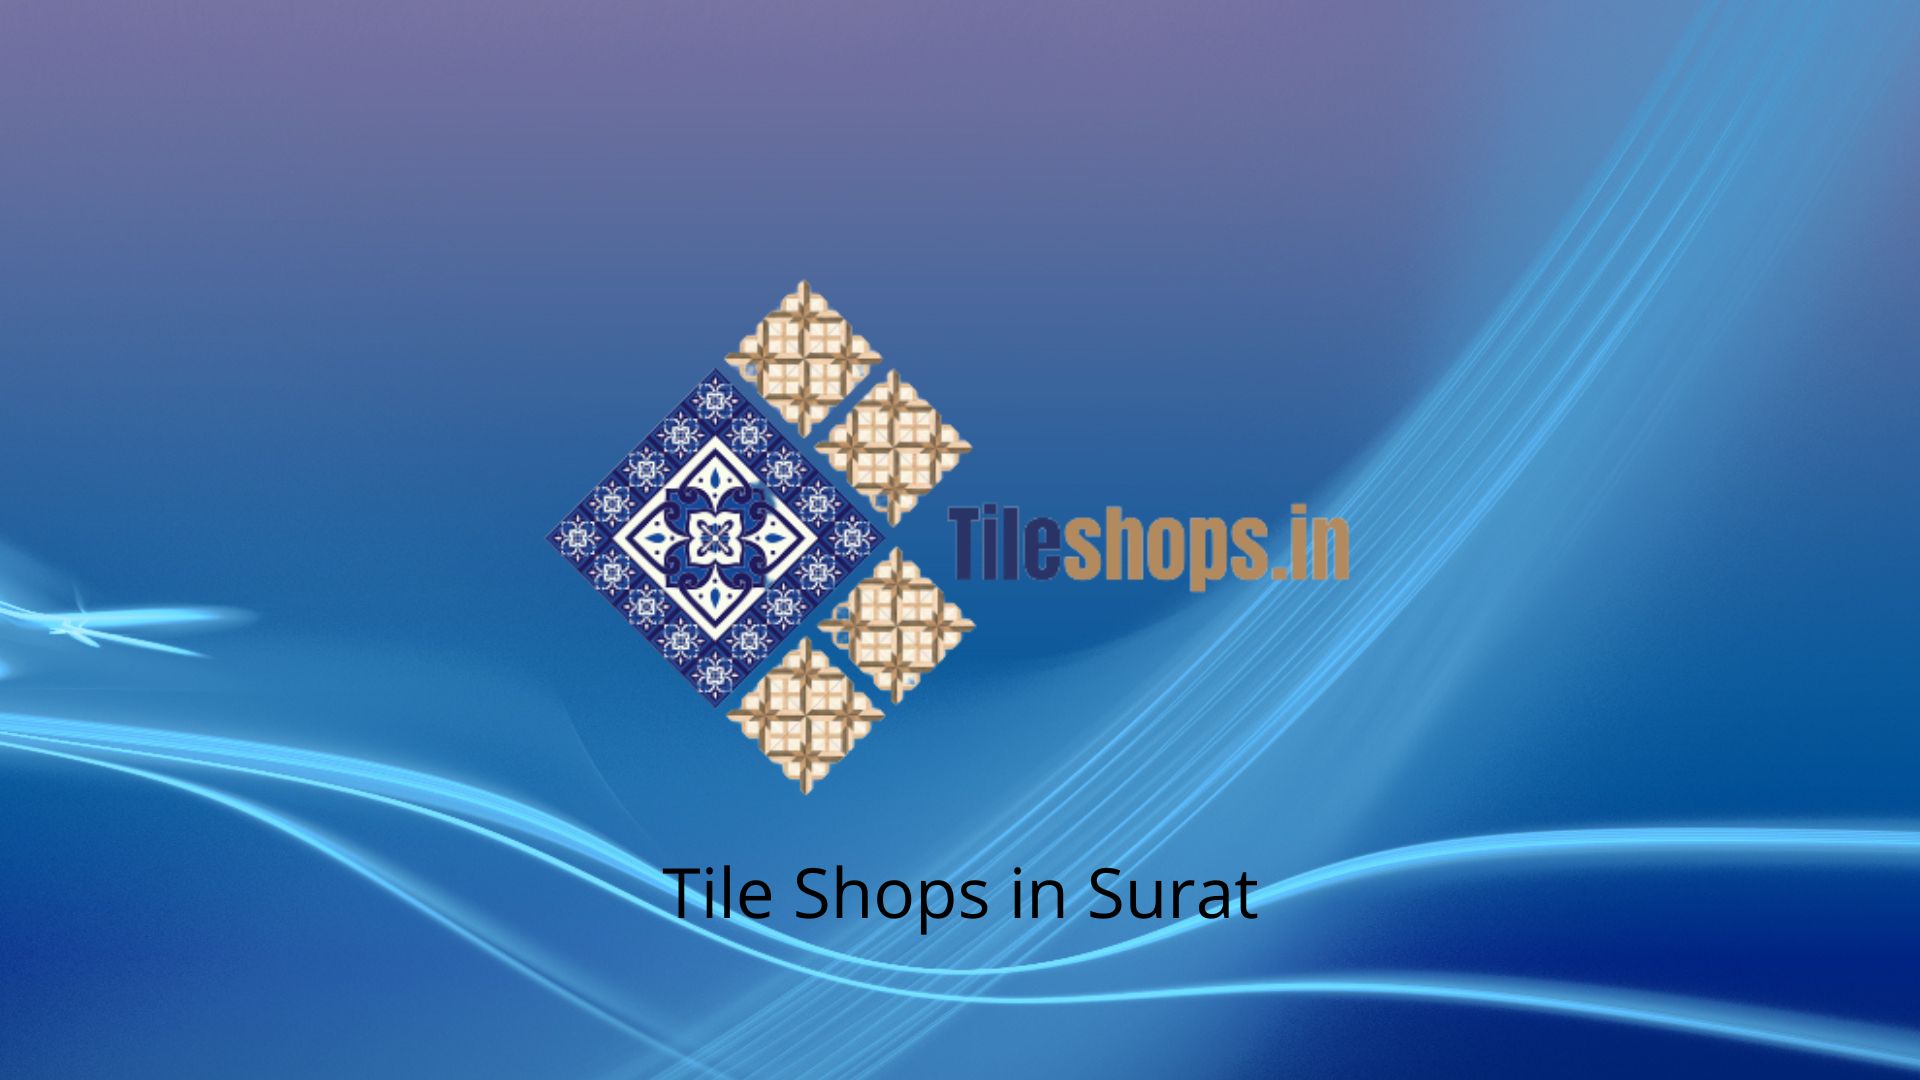 Tile Shops in Surat